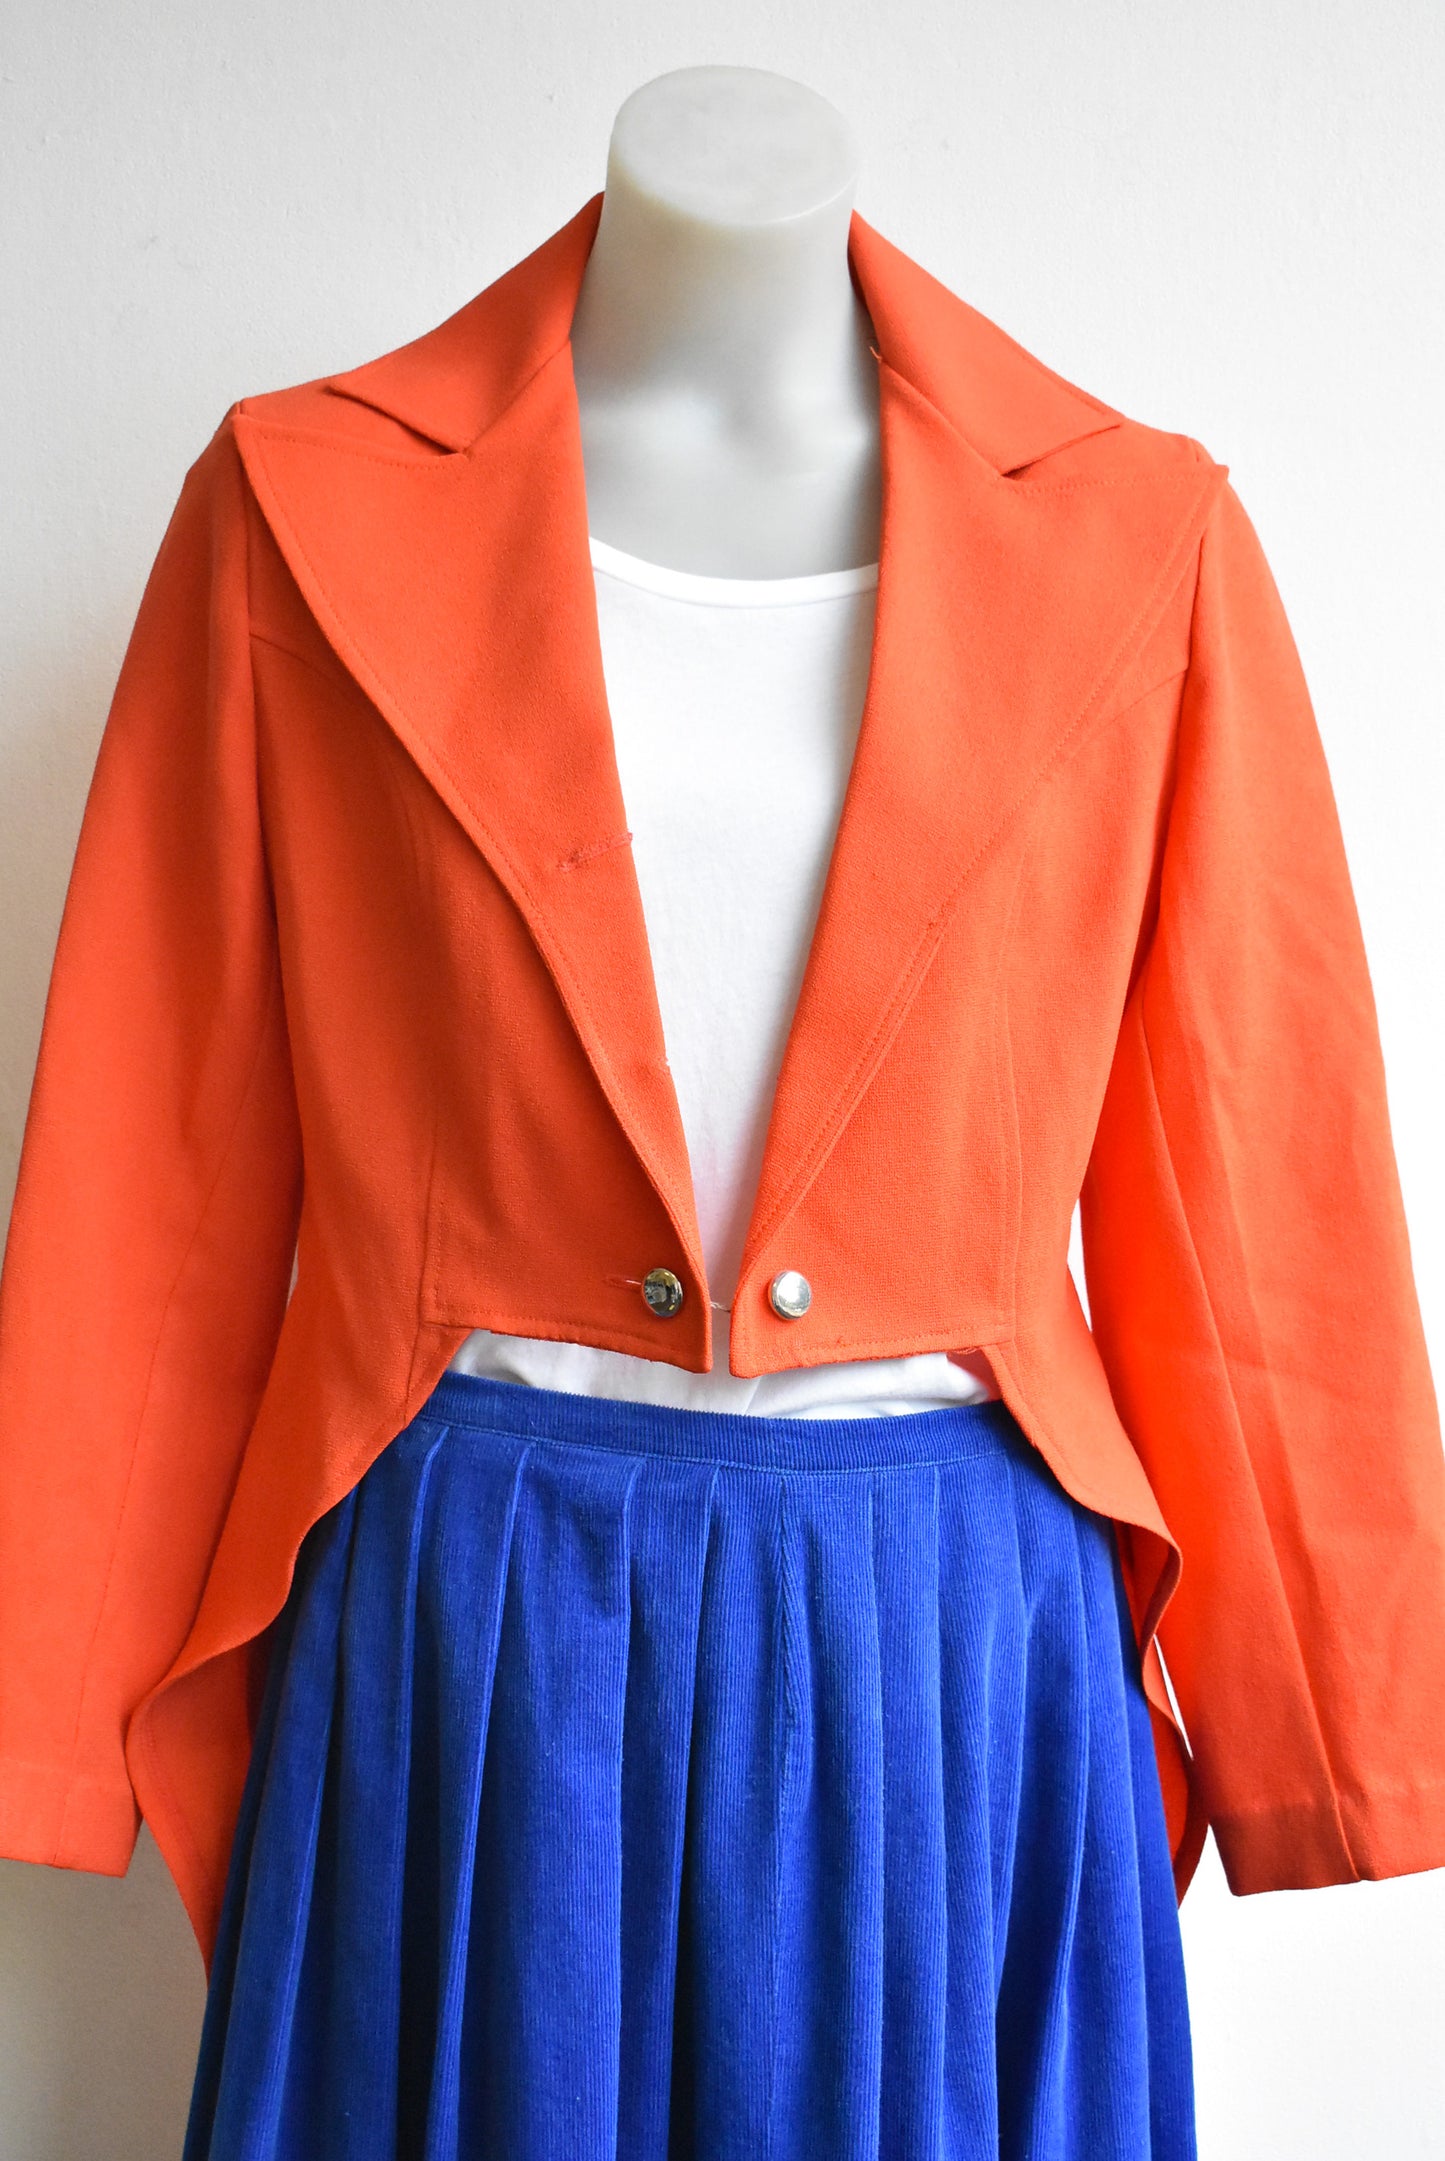 Raymonde Orange Tail coat, made in NZ